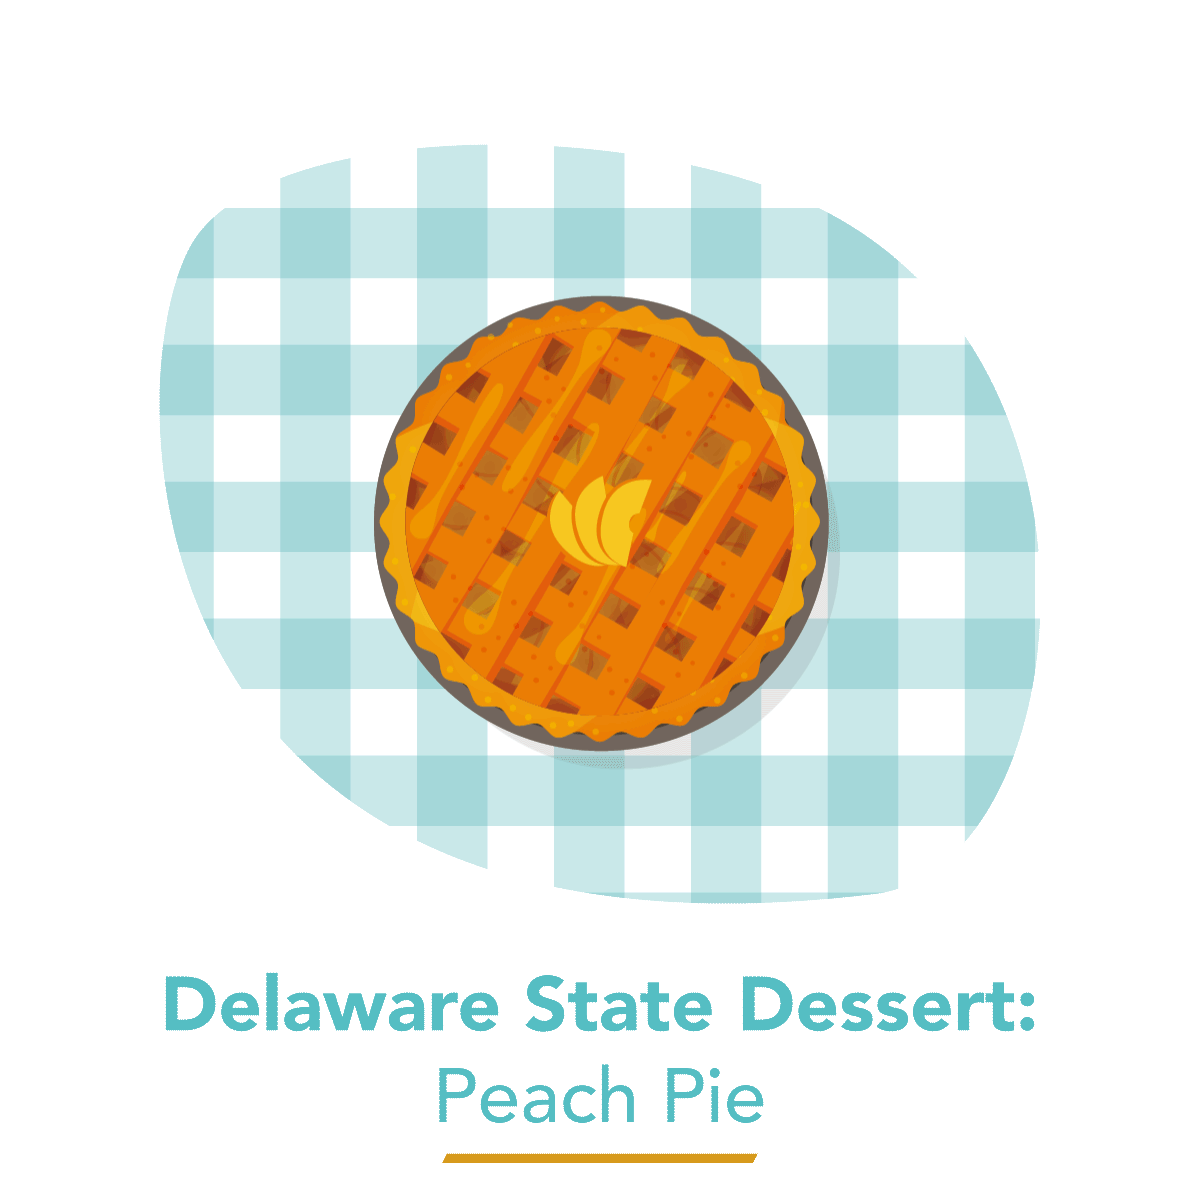 Peach Pie - Delaware's State Dessert